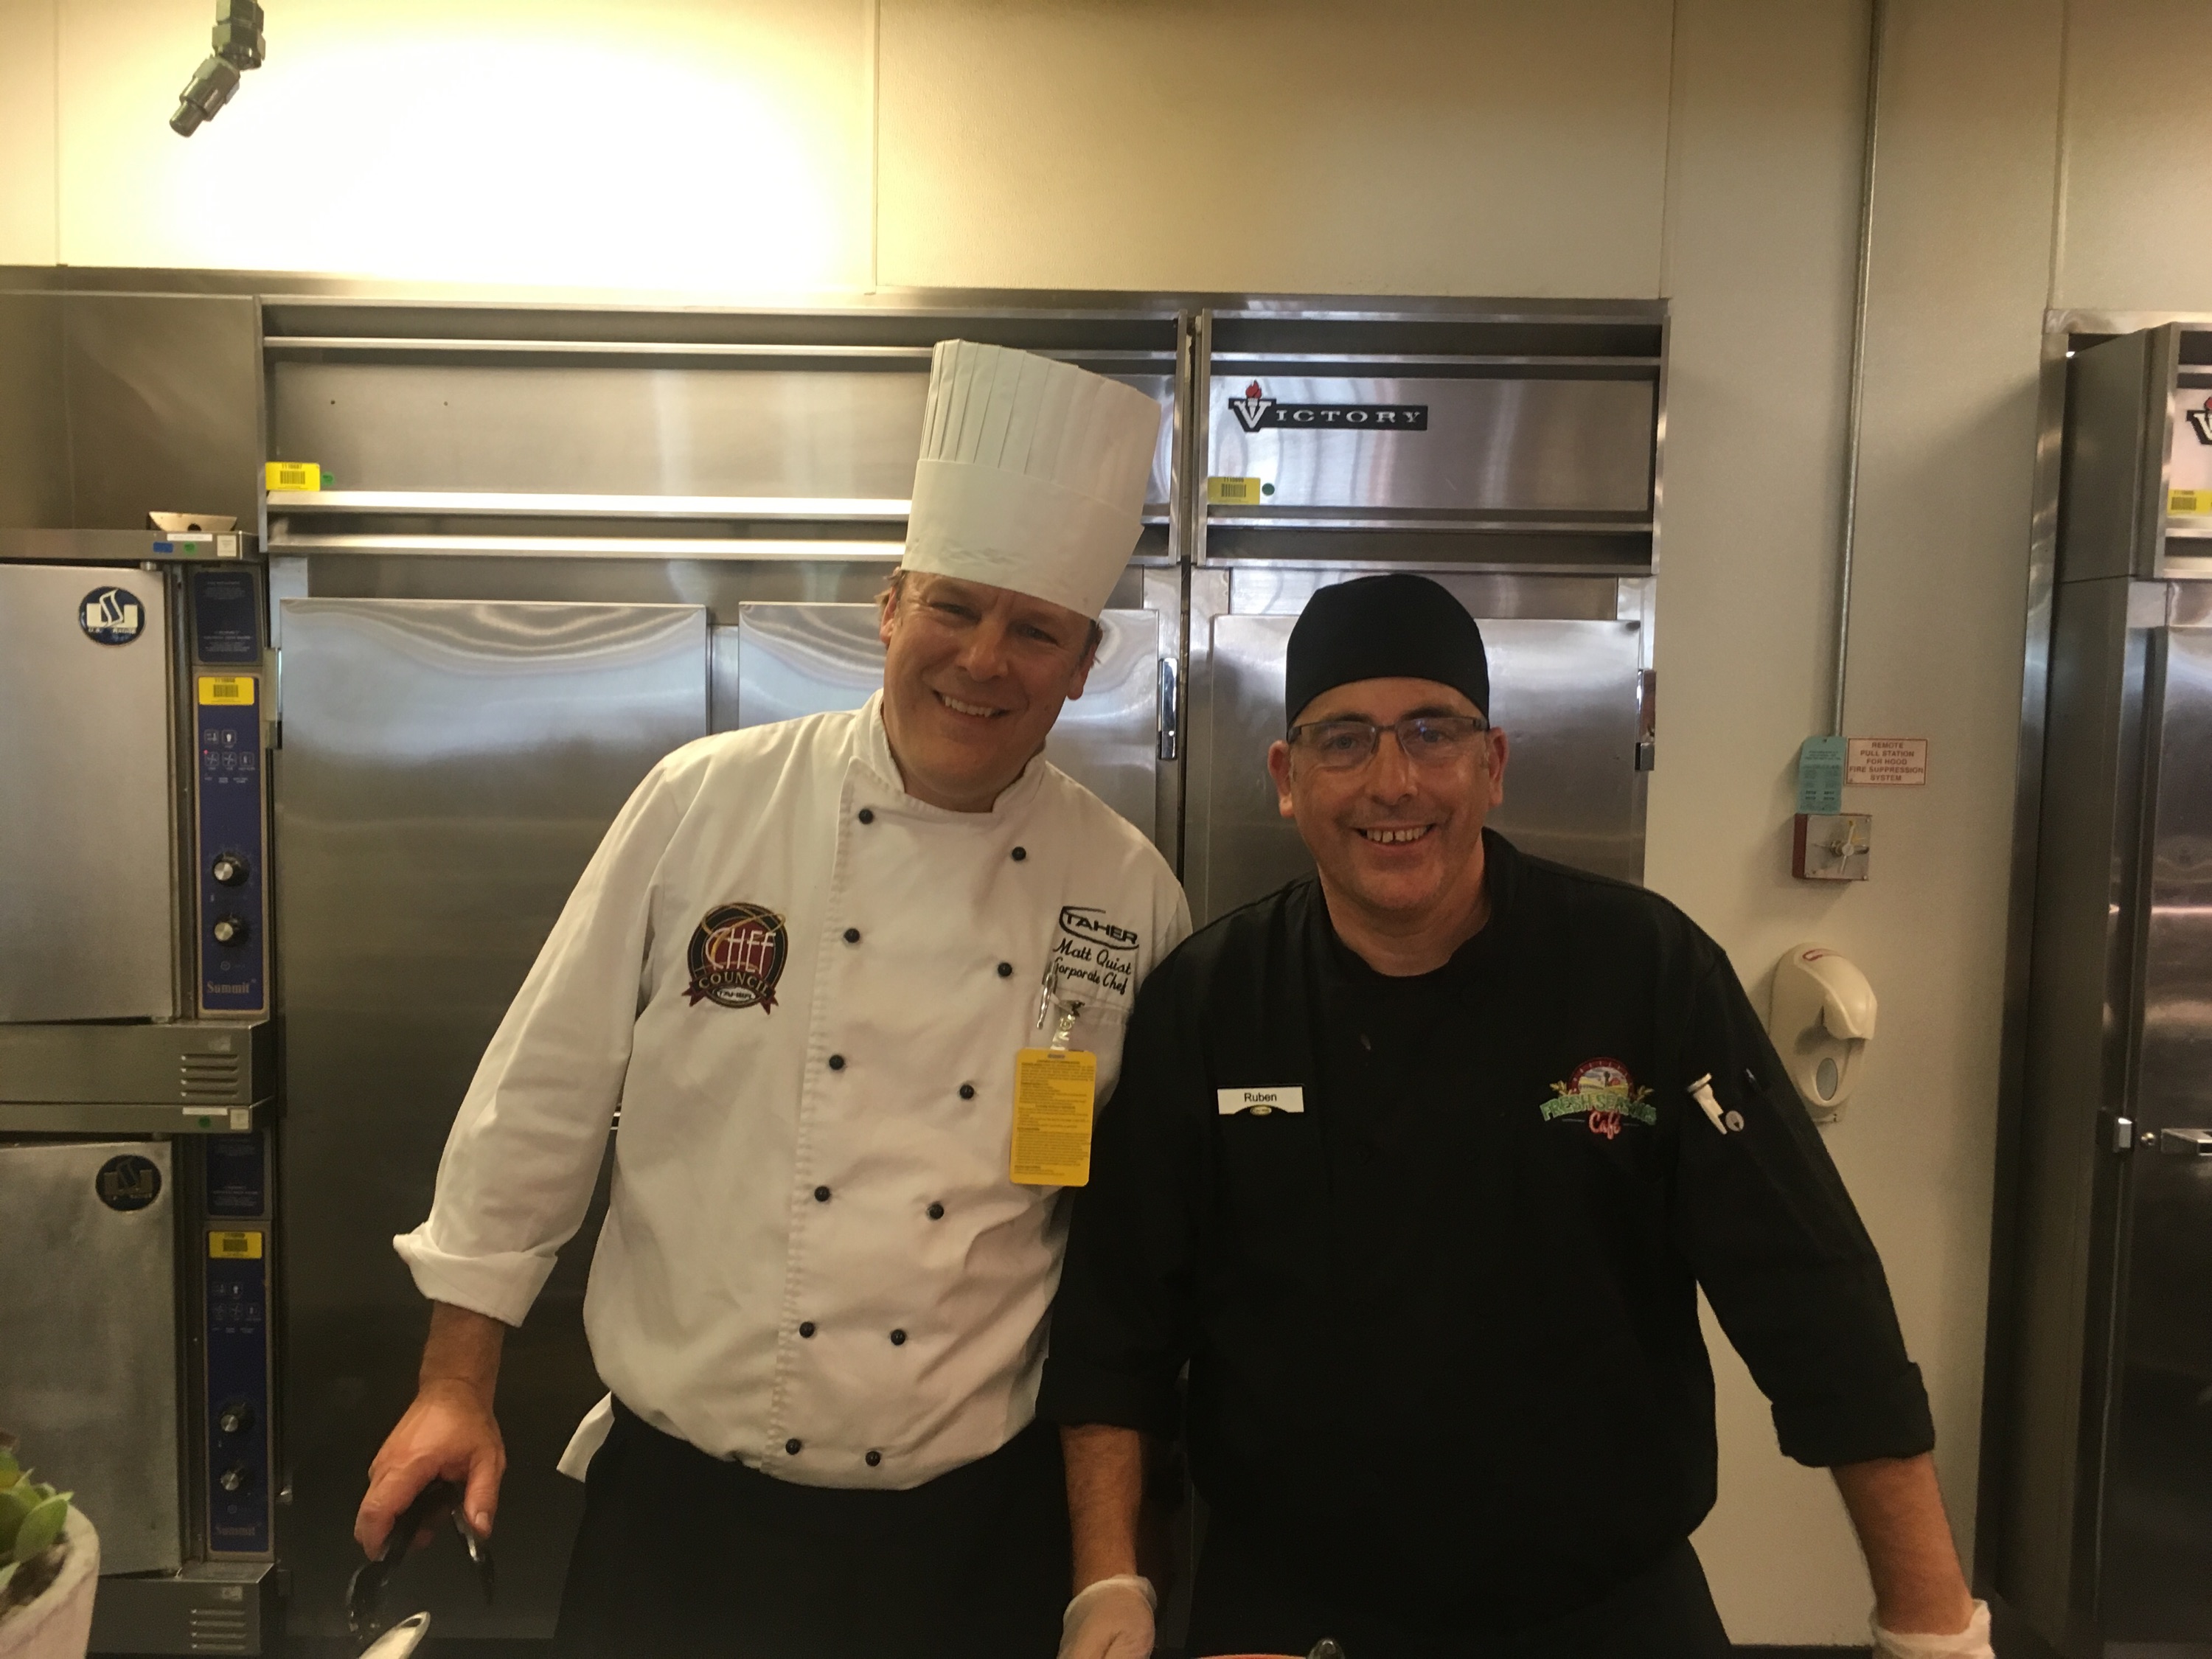 Chef Matt and Ruben at the World Cuisne station